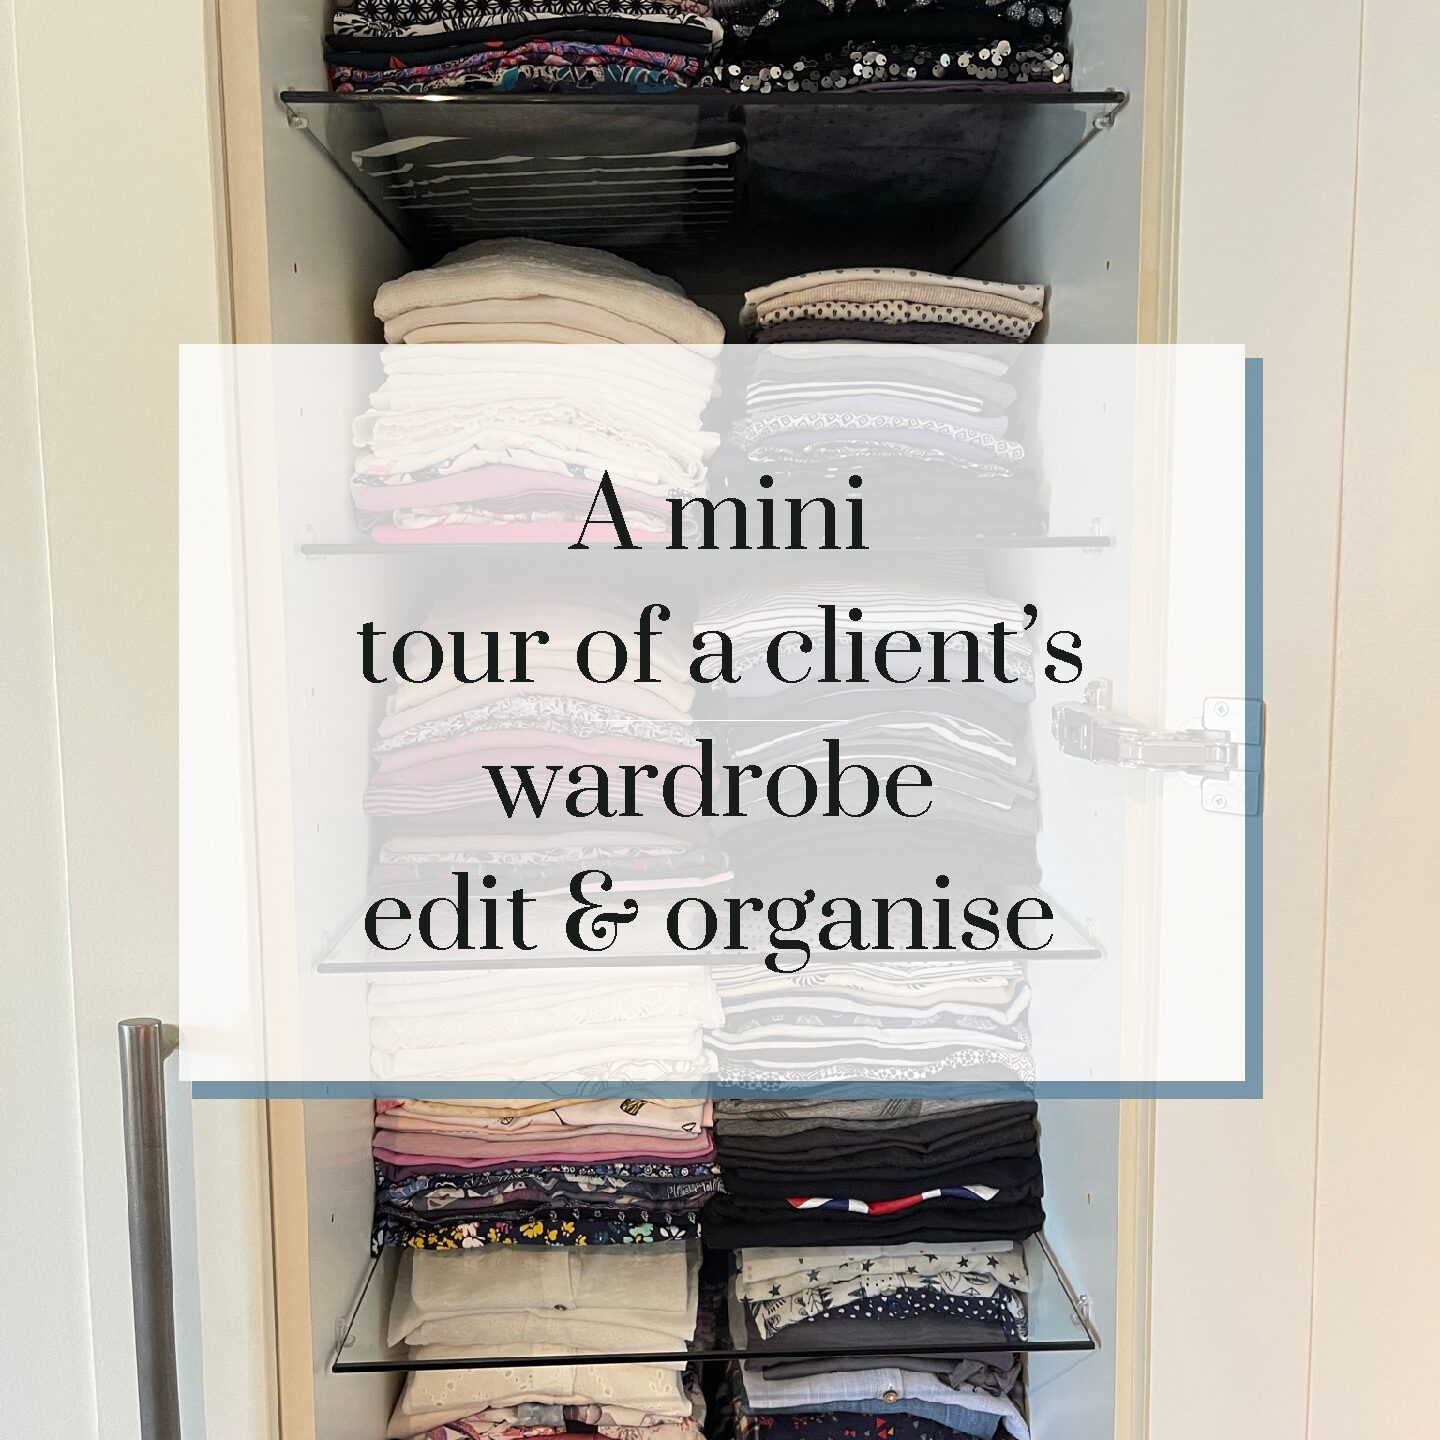 A mini tour of a client’s wardrobe edit & organise!